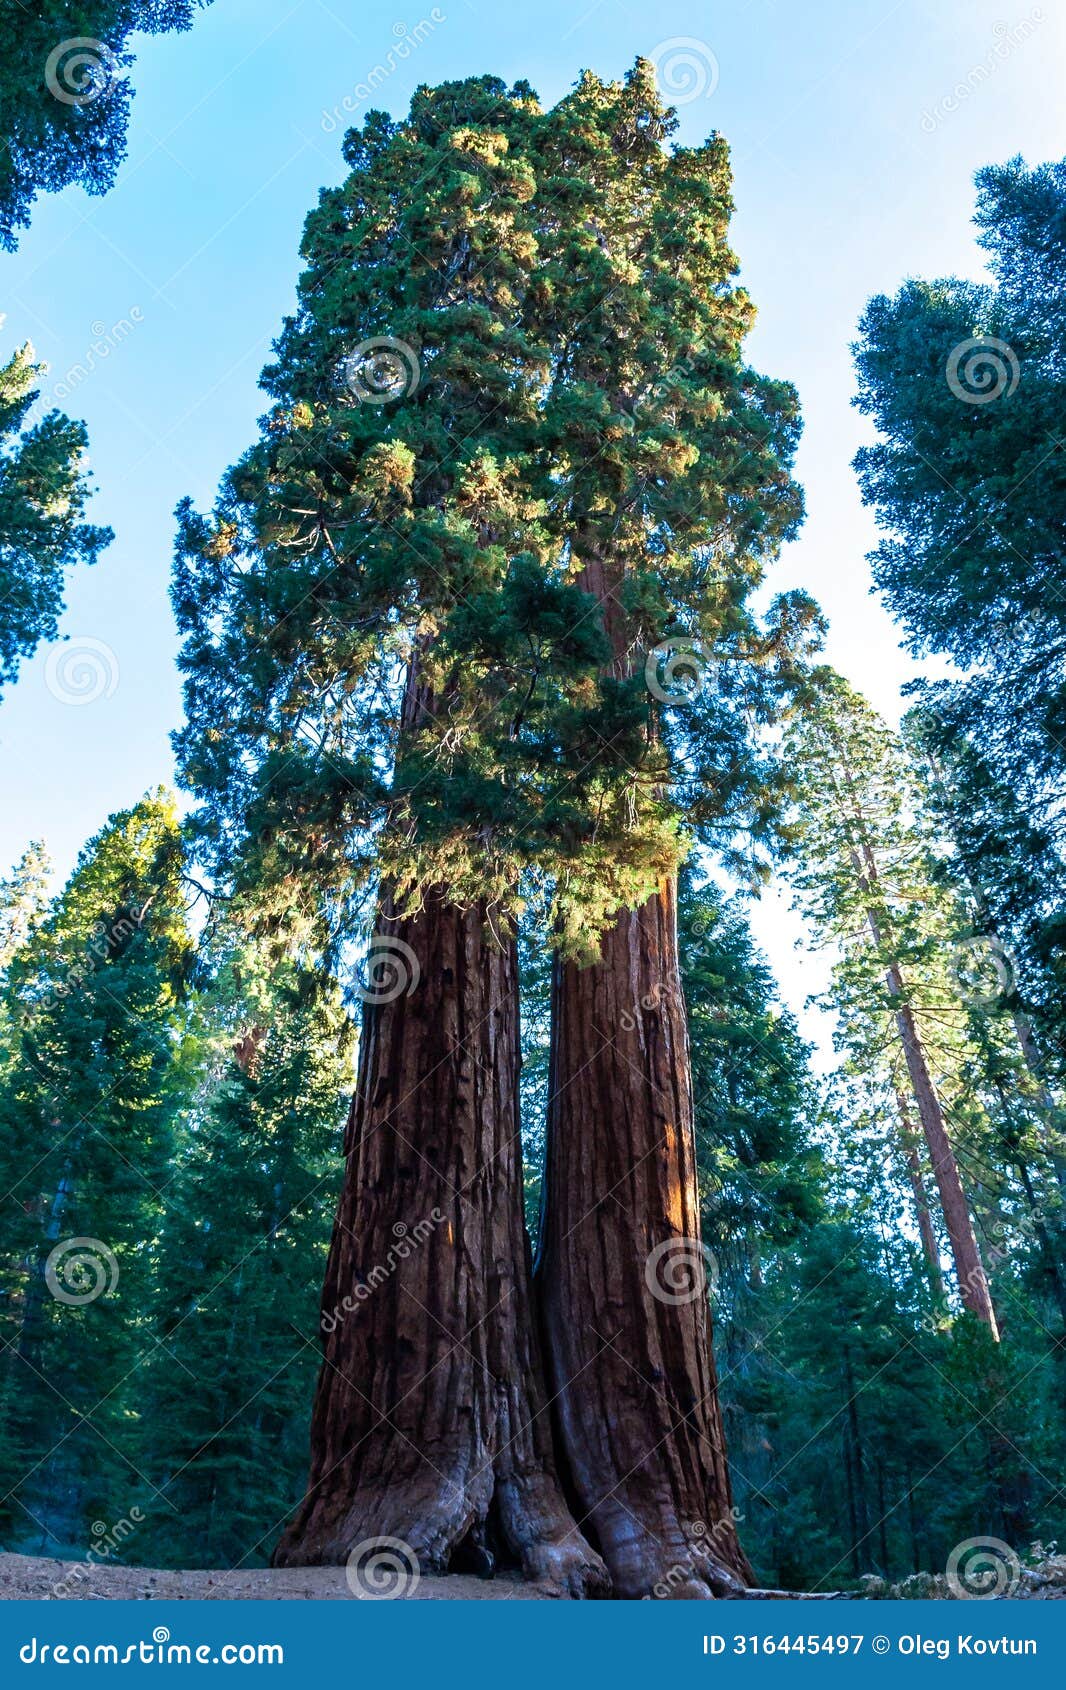 giant sequoia trees (sequoiadendron giganteum) in sequoia national park, california, usa